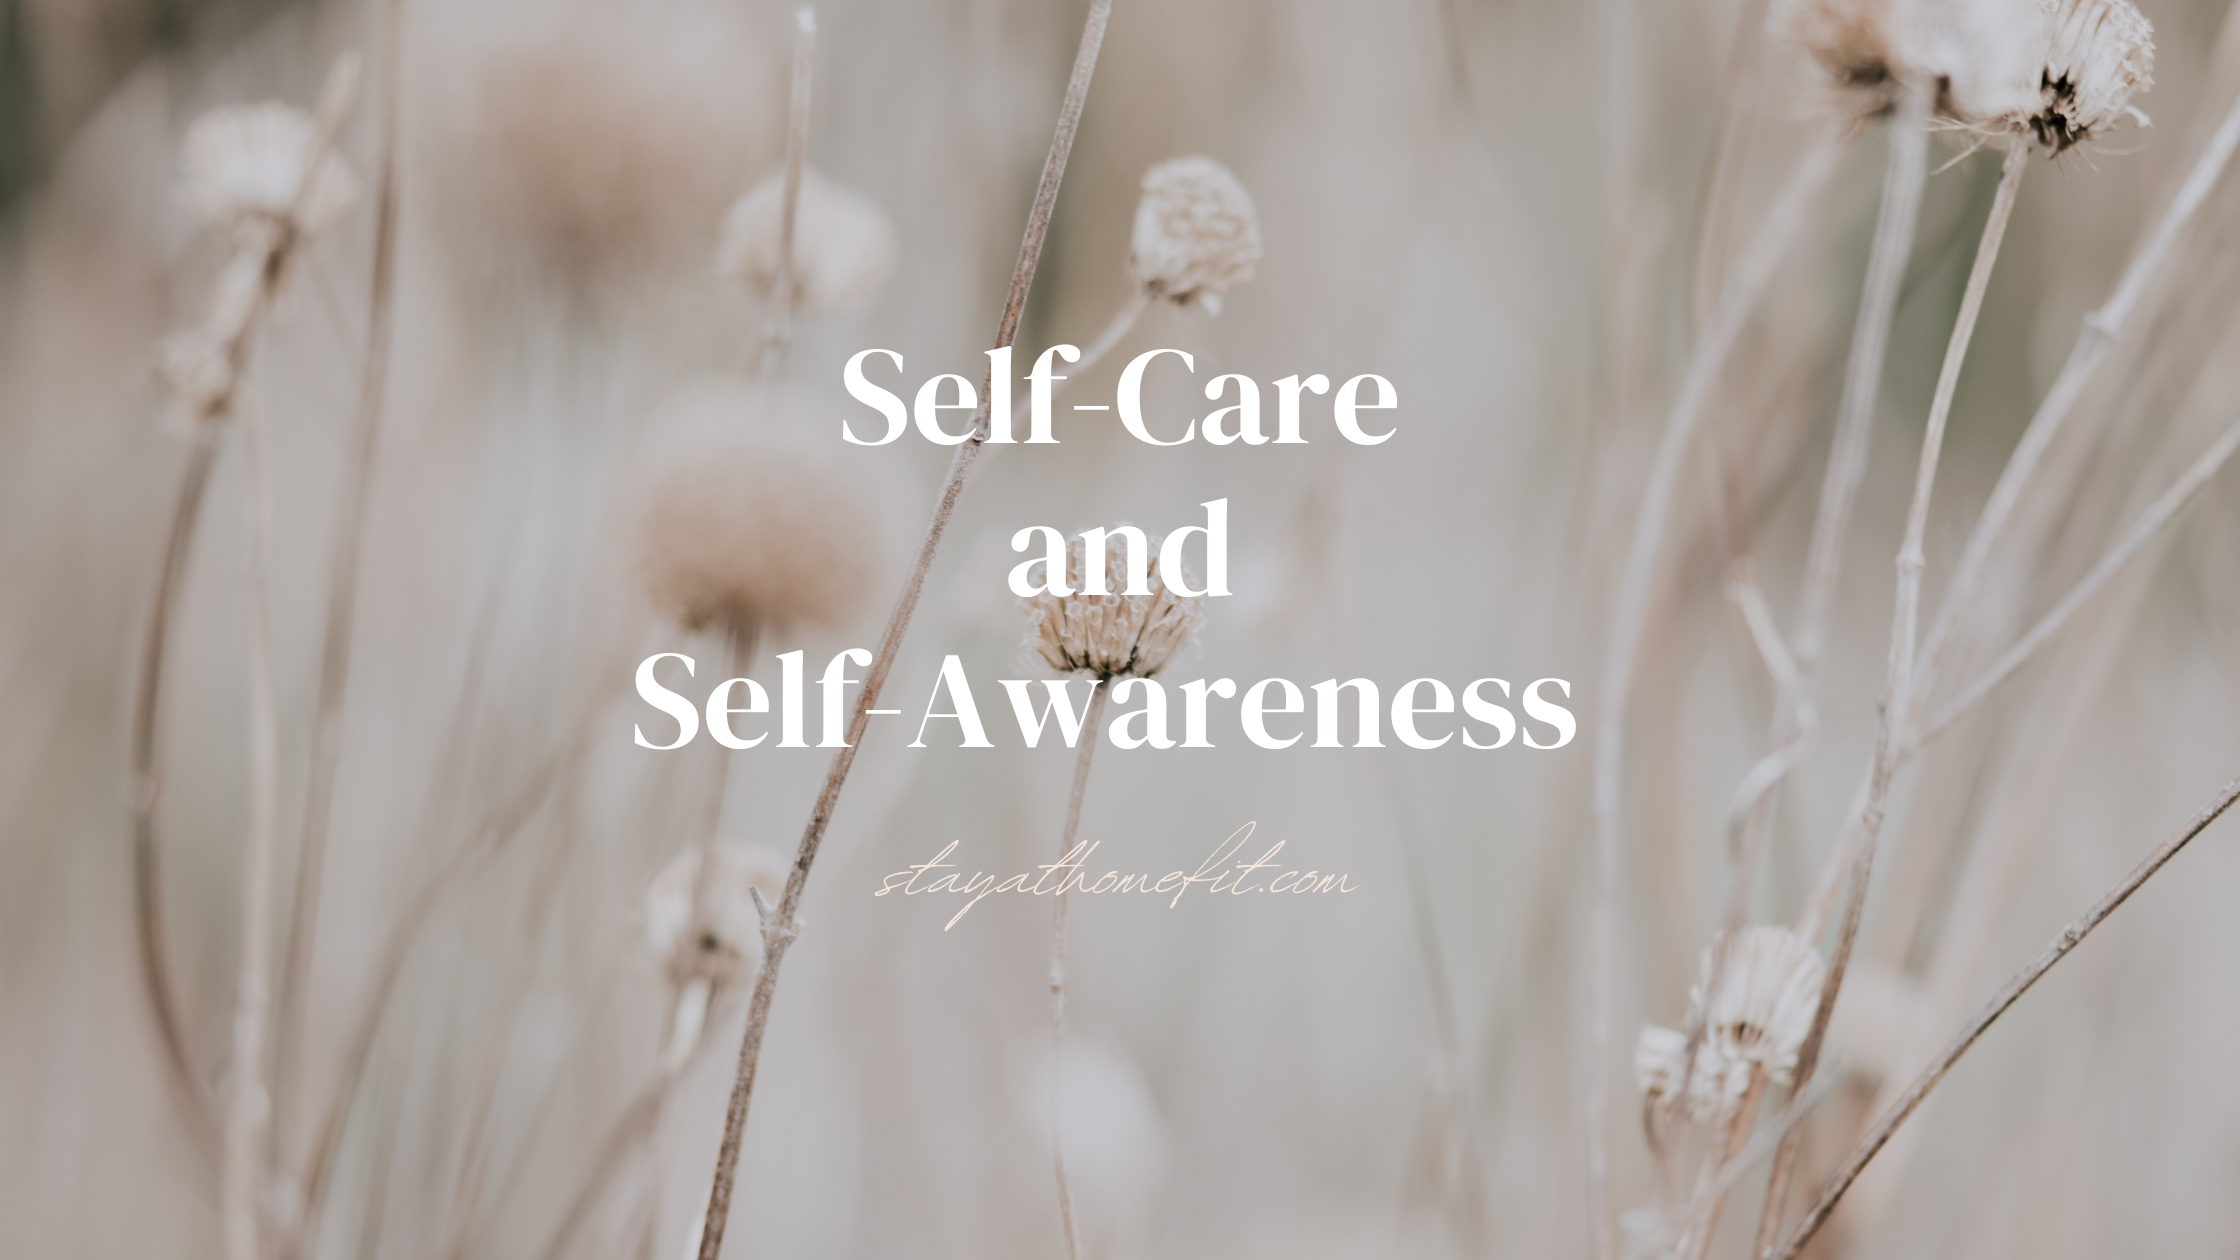 Blog Title: Self-Care and Self-Awareness